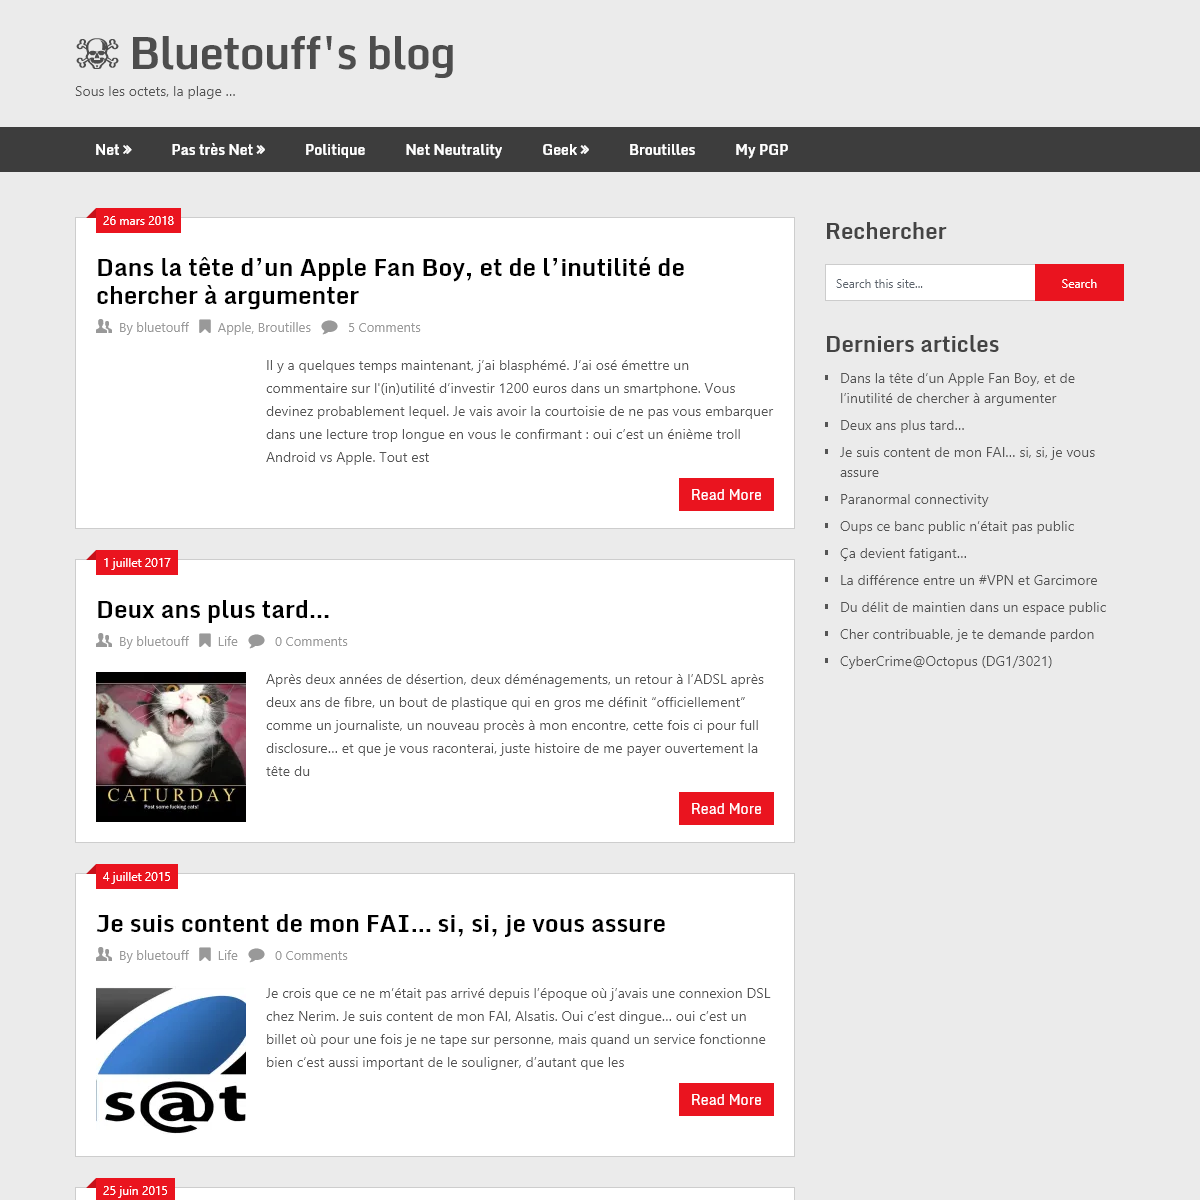 A complete backup of bluetouff.com